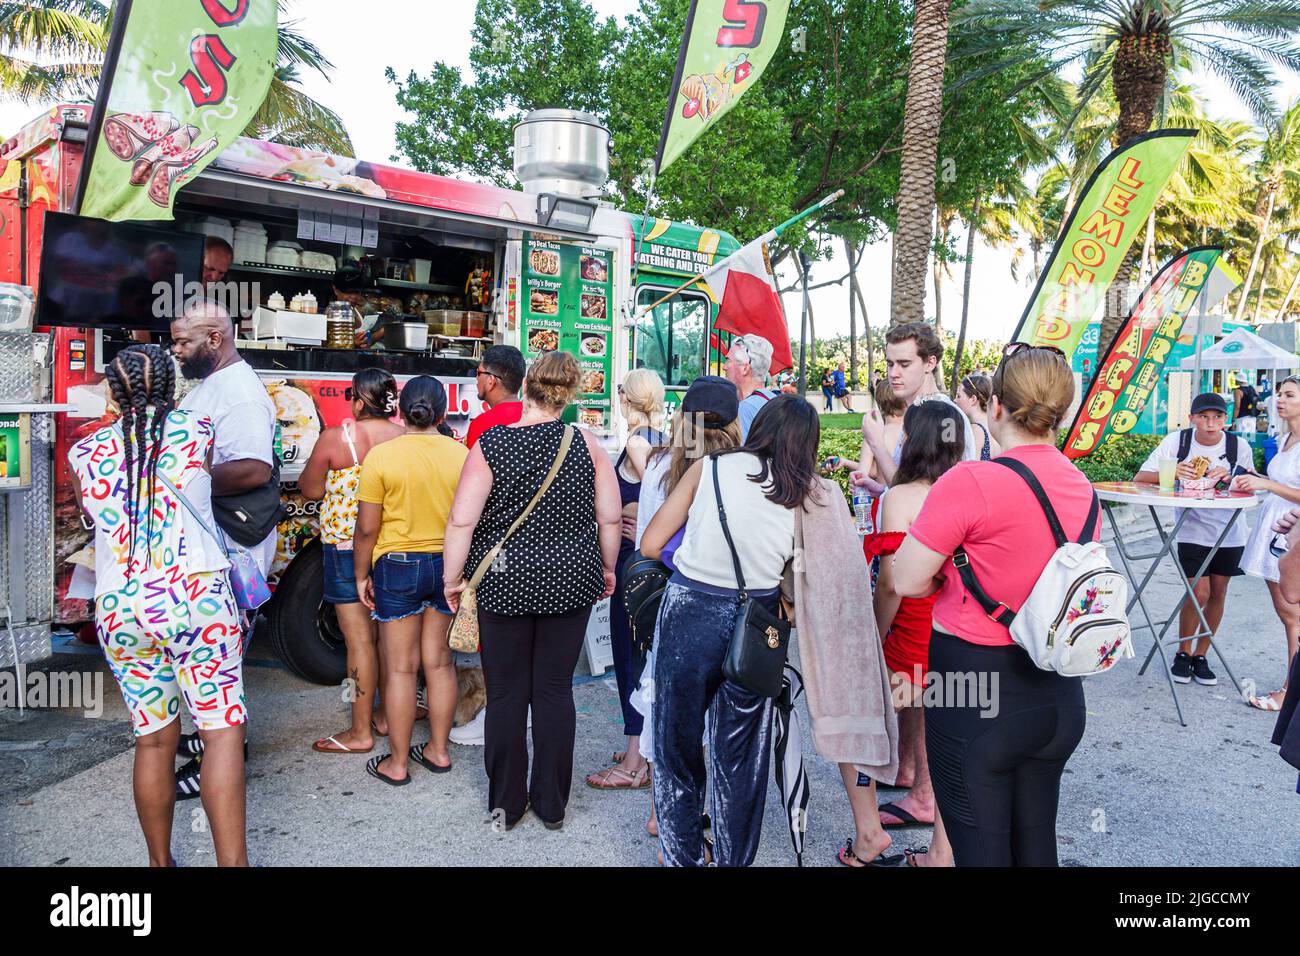 Miami Beach Florida, Ocean Terrace Fire on the Fourth 4th of July Festival event Celebration, food Truck line coda clienti uomini donne in attesa Foto Stock